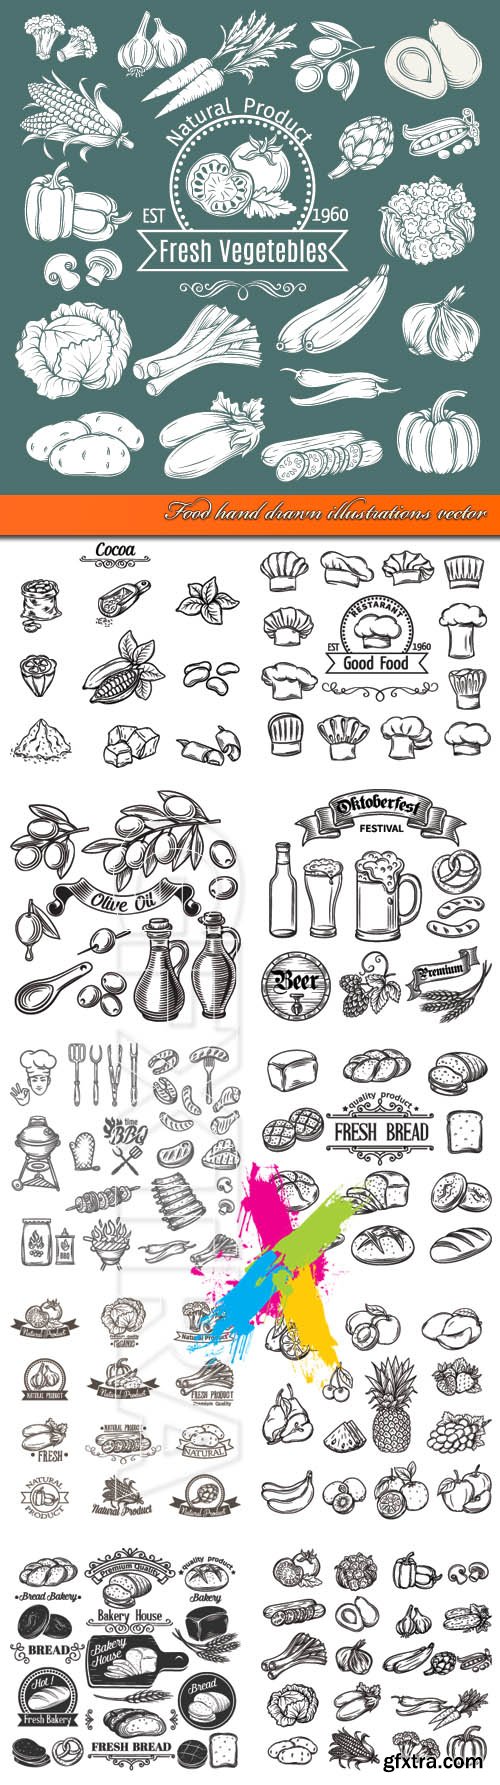 Food hand drawn illustrations vector